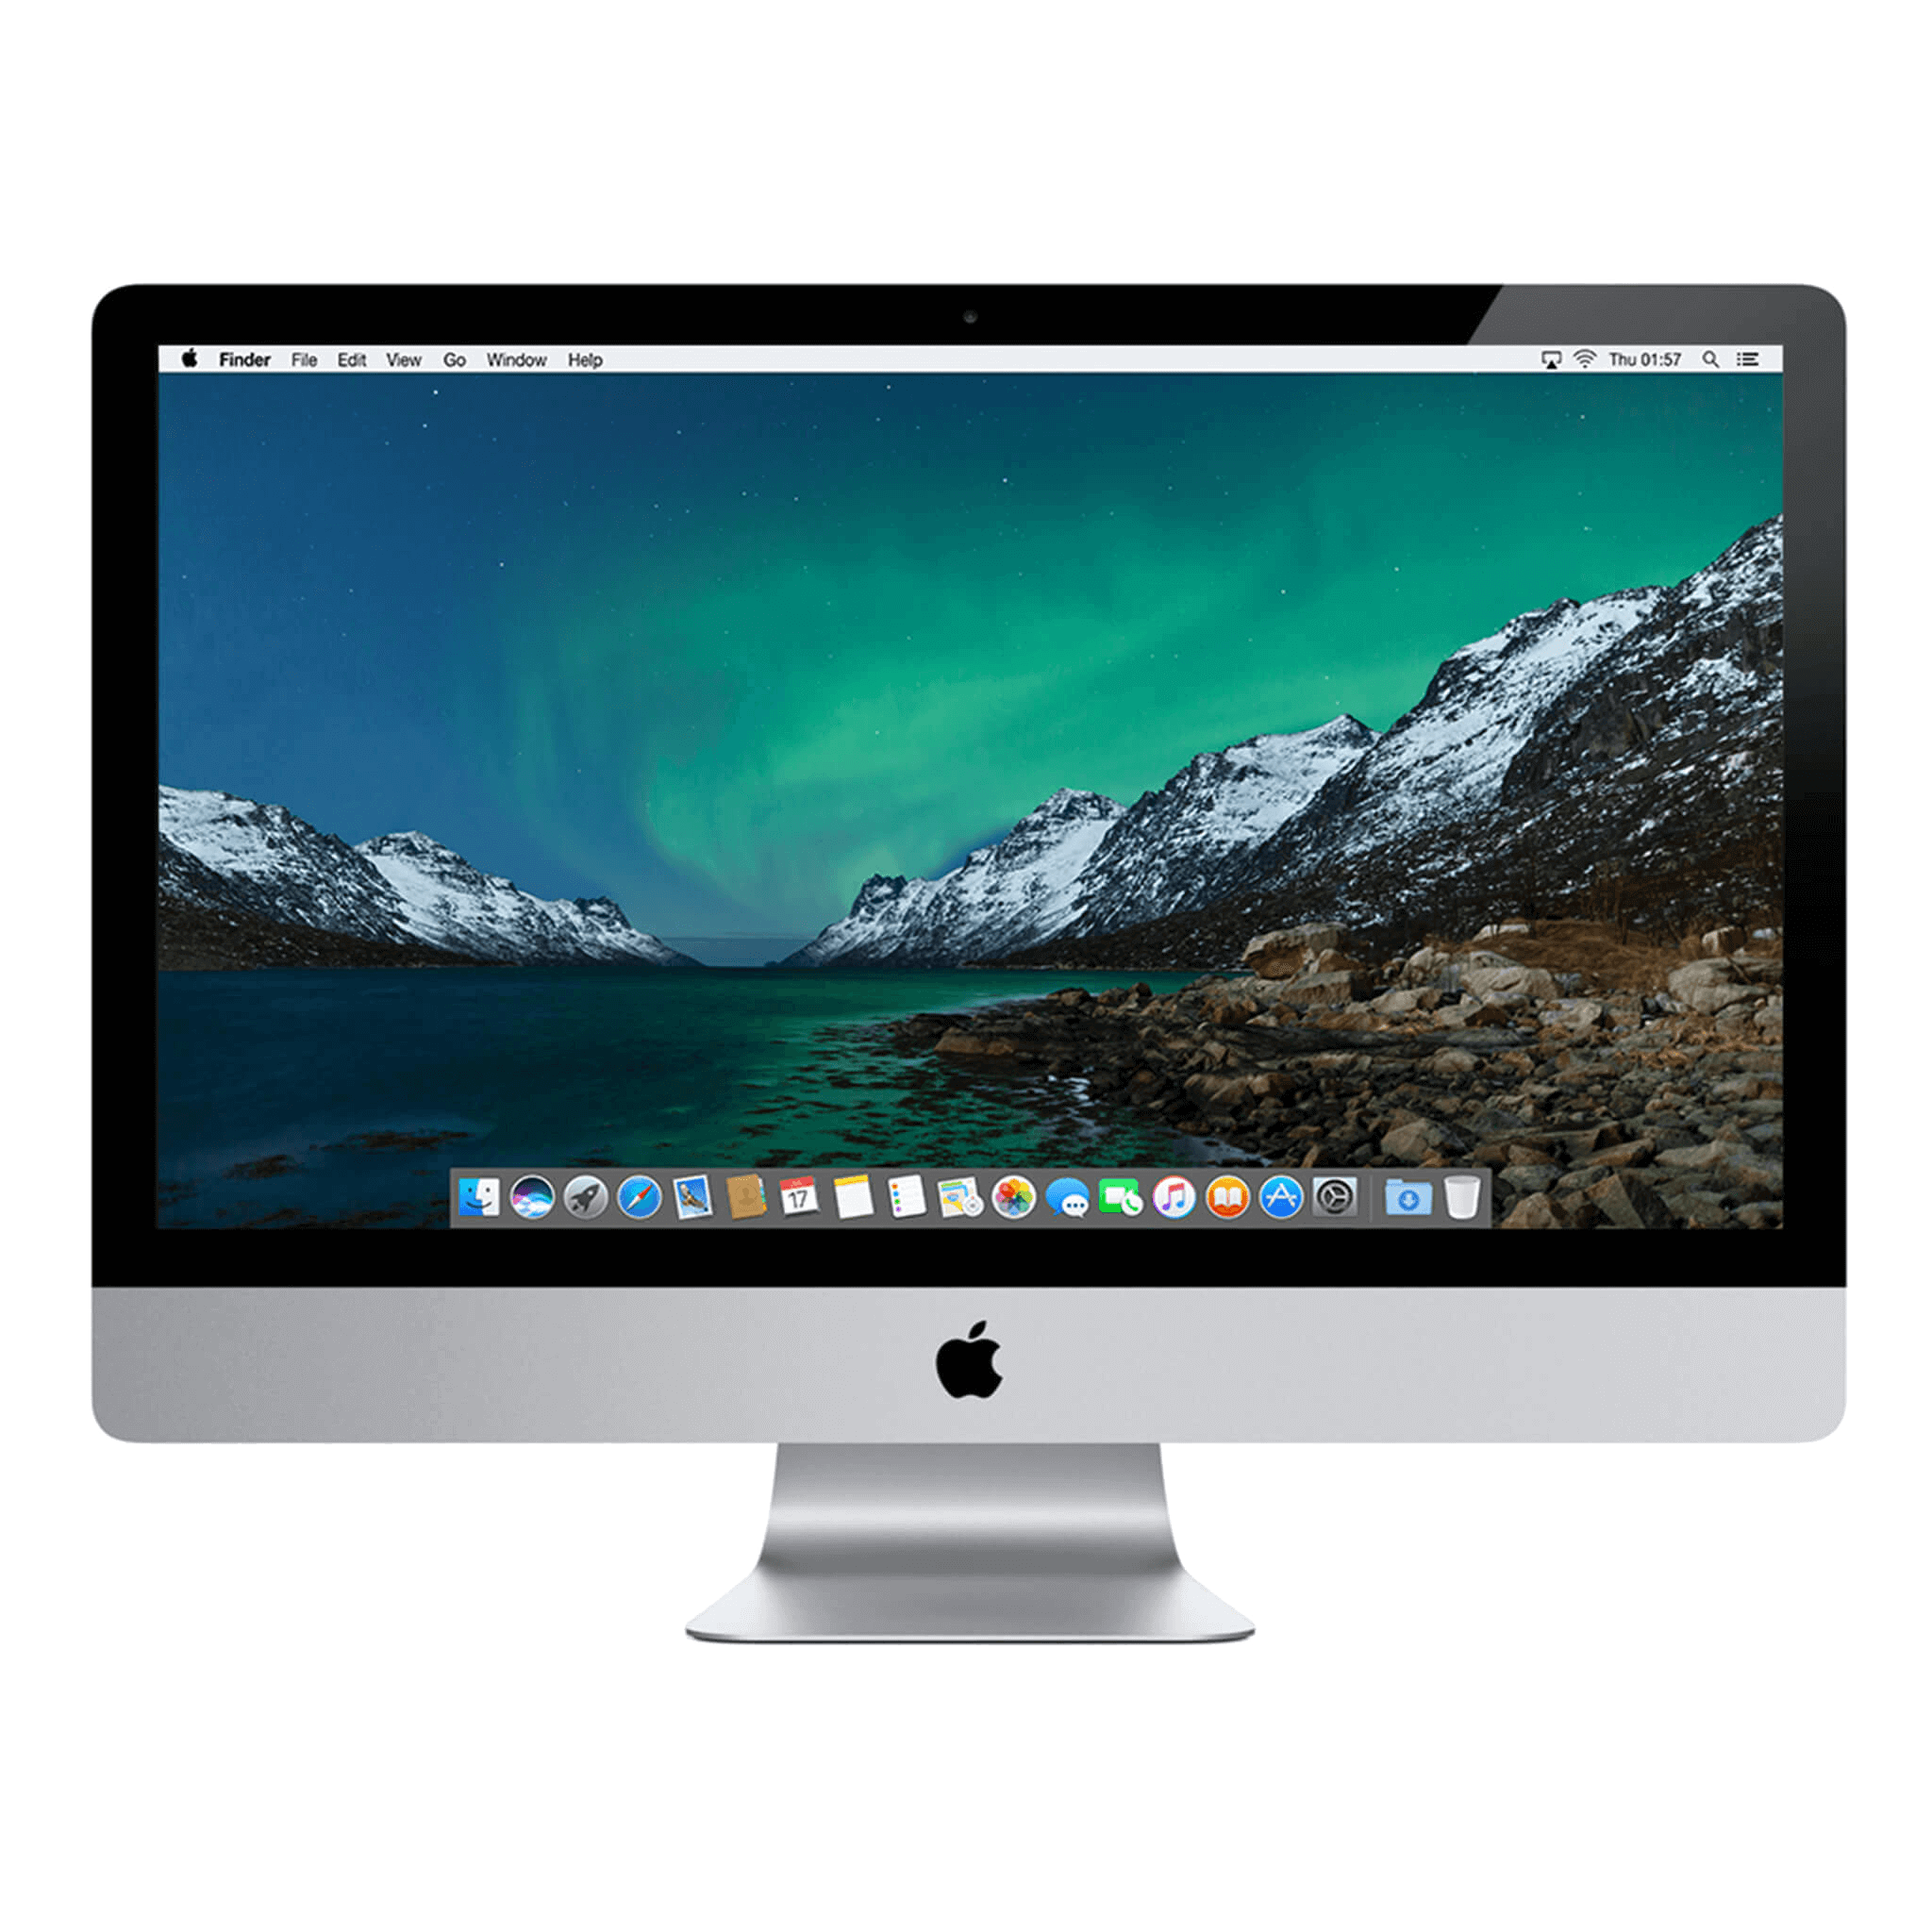 Refurbished iMac 27" (5K) i7 4.0 16GB 1TB Fusion Als nieuw